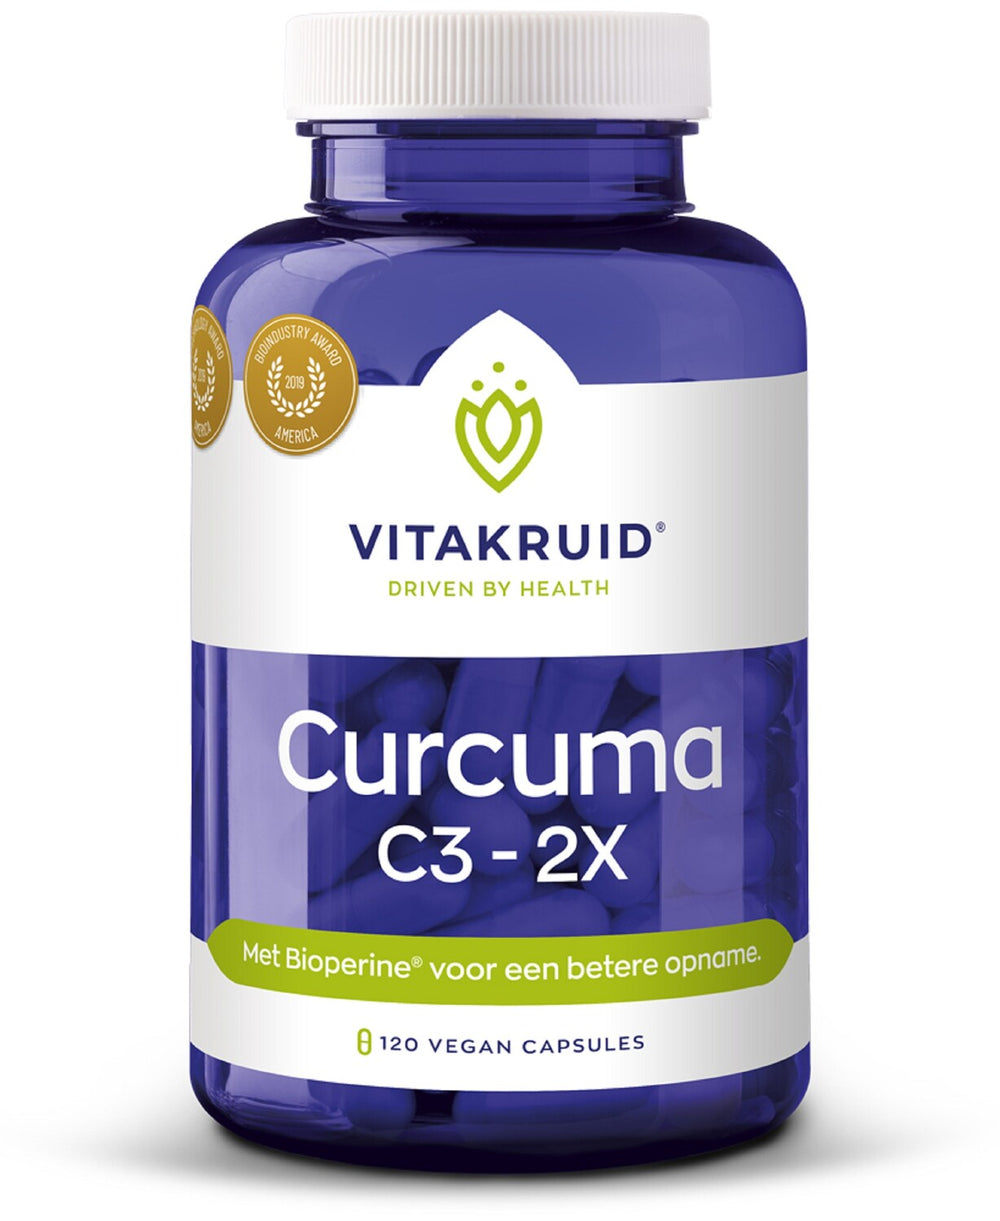 Vitakruid Curcuma C3 - 2X 120 vegetarische capsules